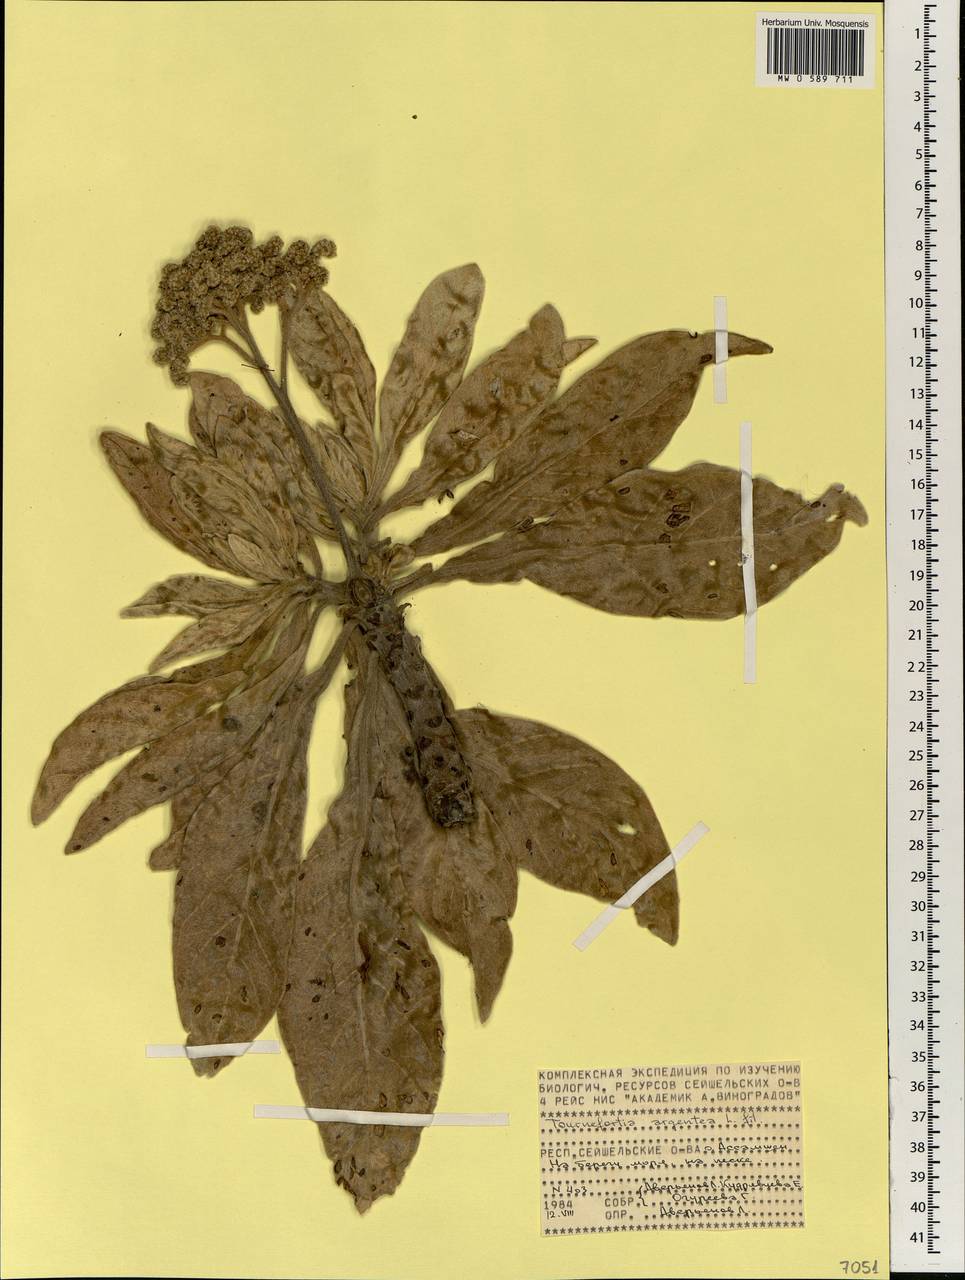 Heliotropium foertherianum Diane & Hilger, Африка (AFR) (Сейшельские острова)